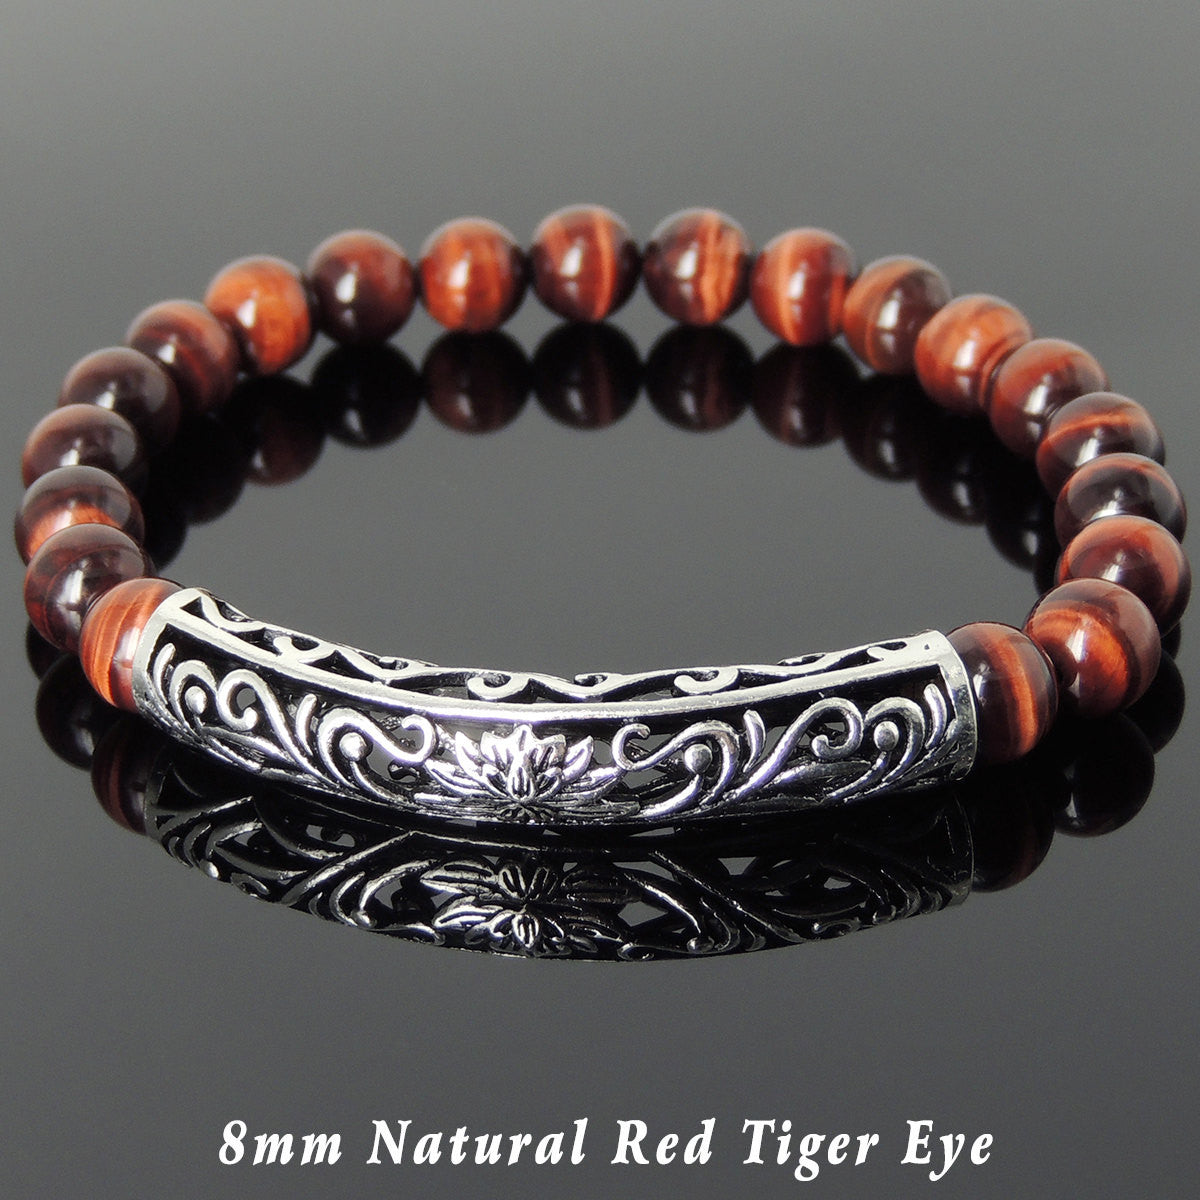 8mm Red Tiger Eye Healing Gemstone Bracelet with S925 Sterling Silver Lotus Charm - Handmade by Gem & Silver BR1032